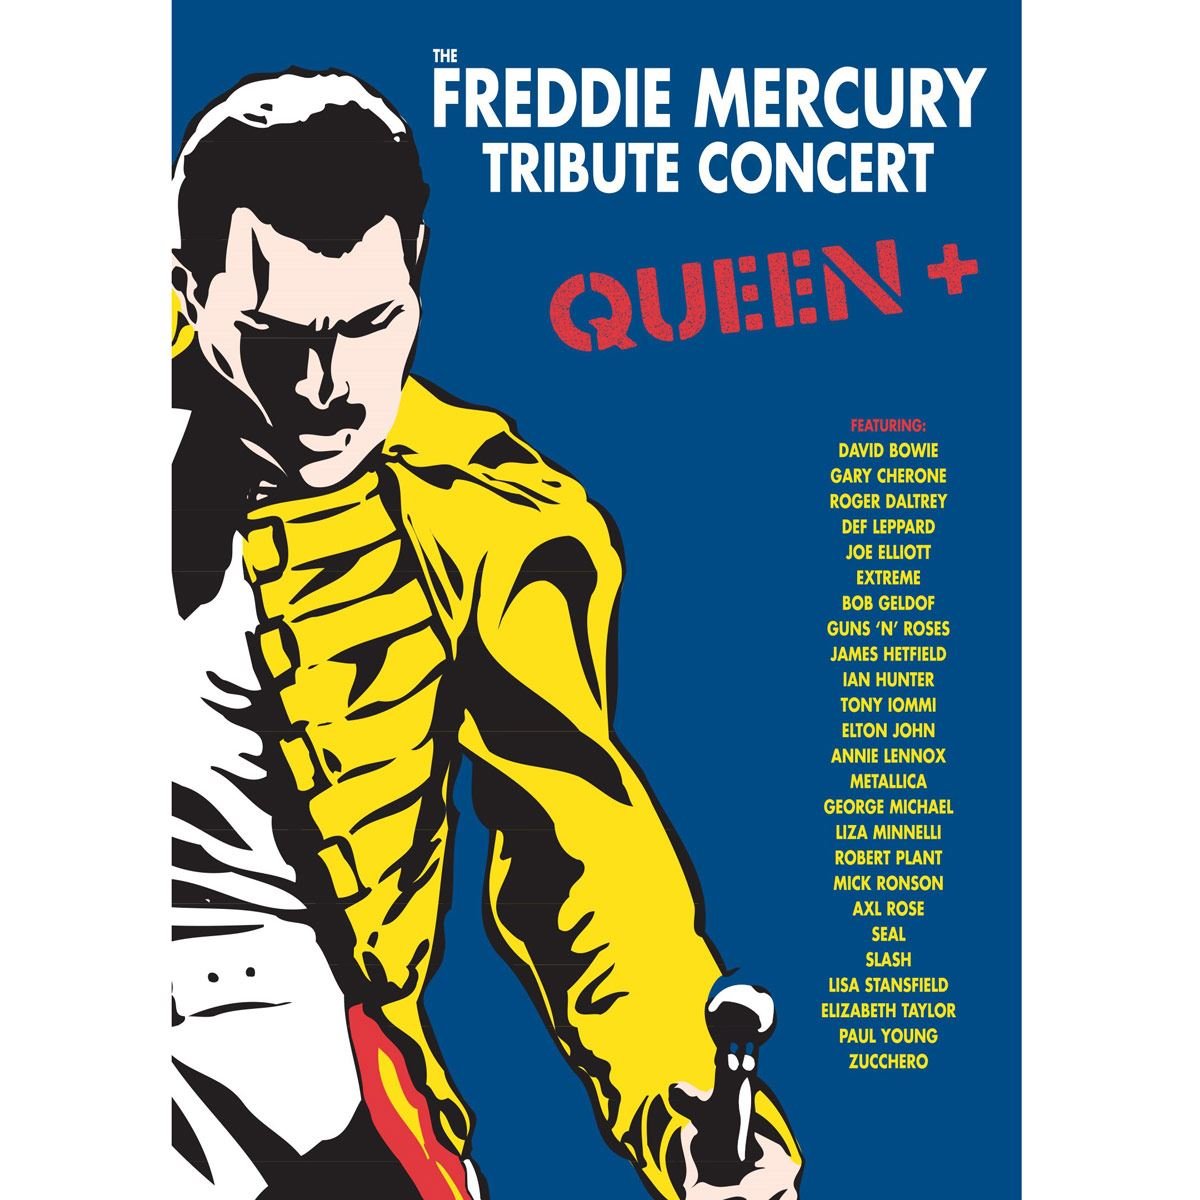 DVD Various Artists- The Freddie Mercury Tribute Concert Queen+